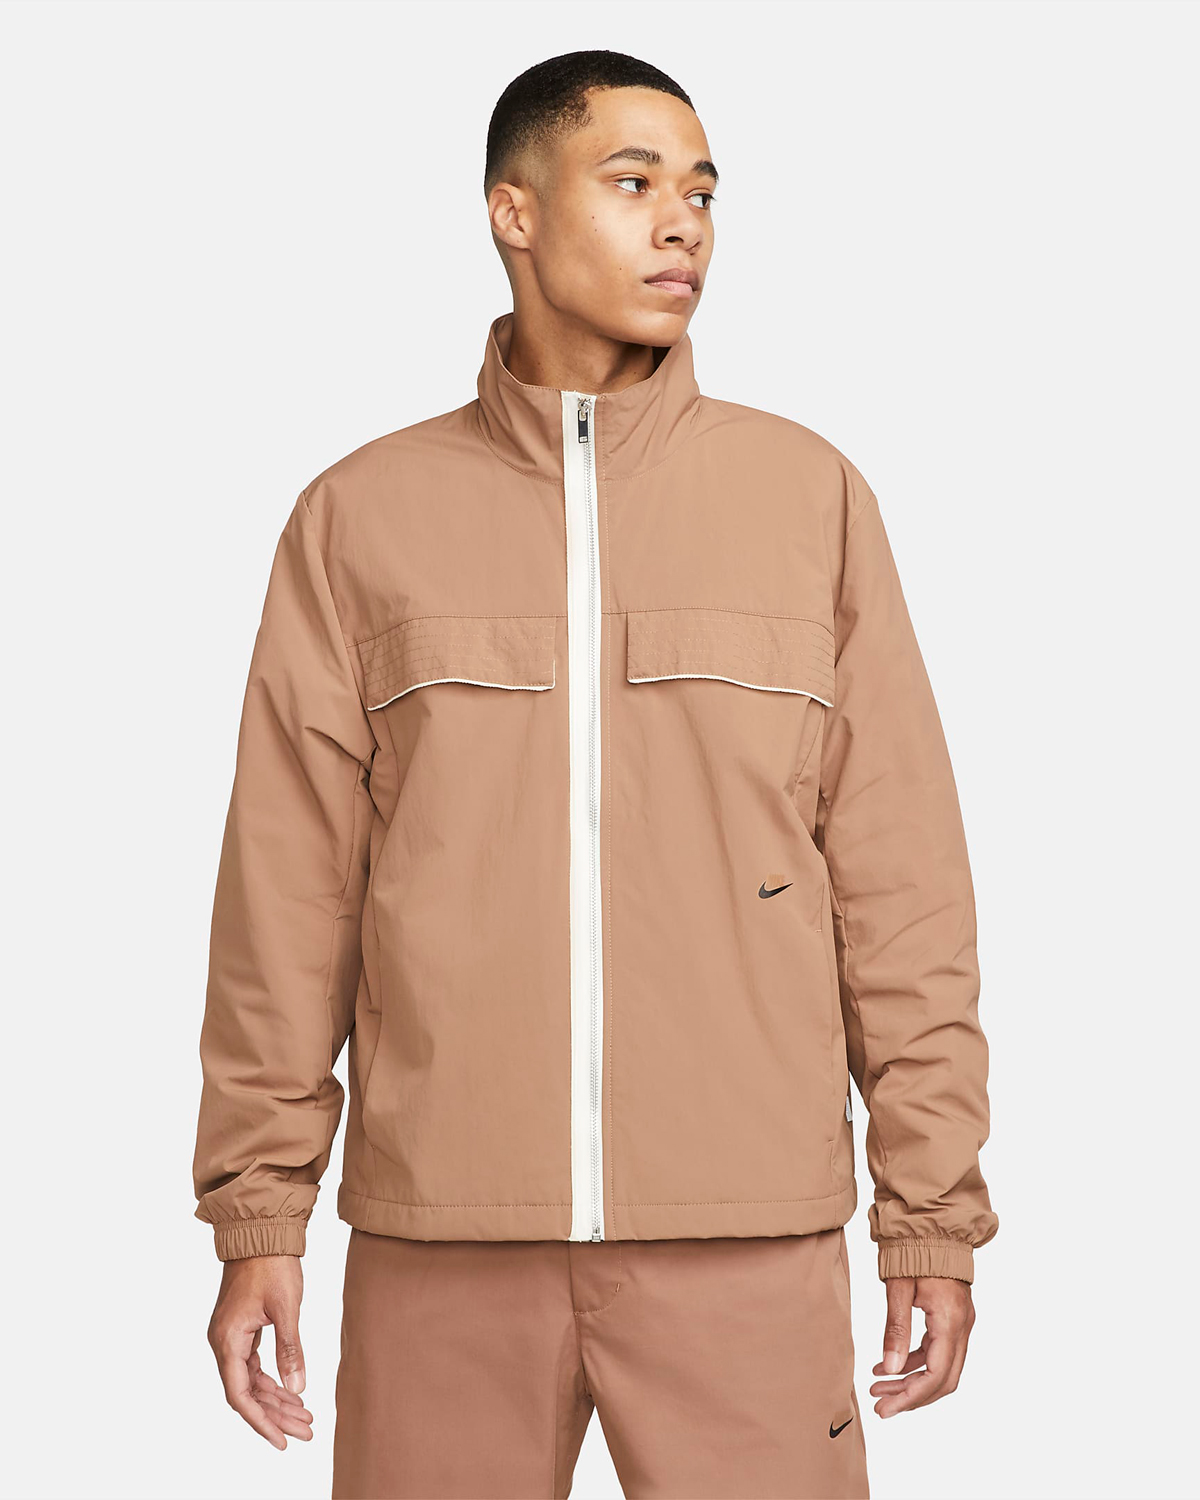 nike-sportswear-m65-jacket-archaeo-brown